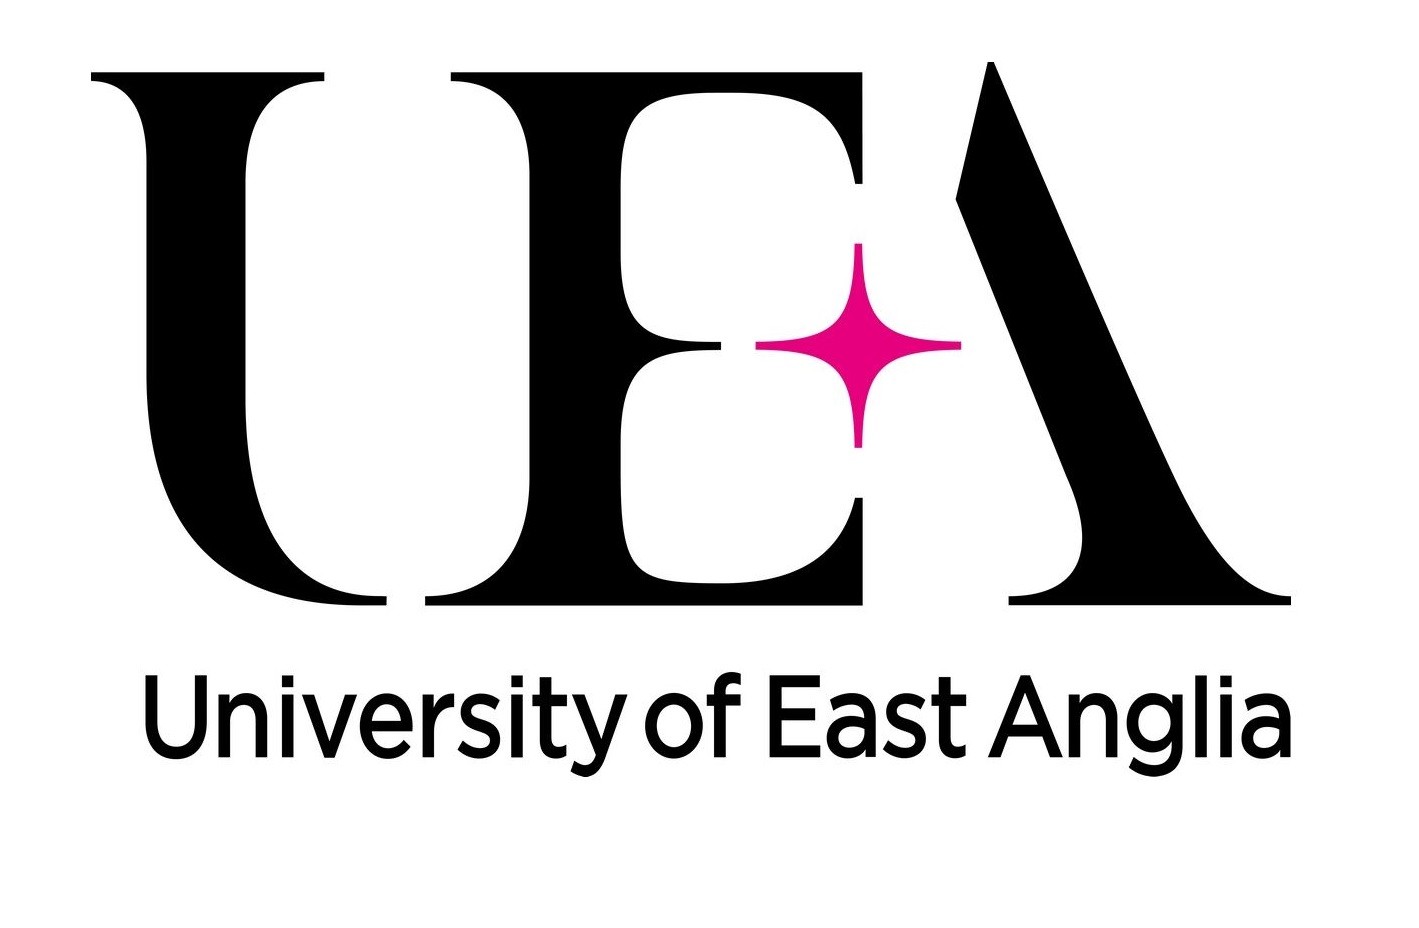 East Anglia University